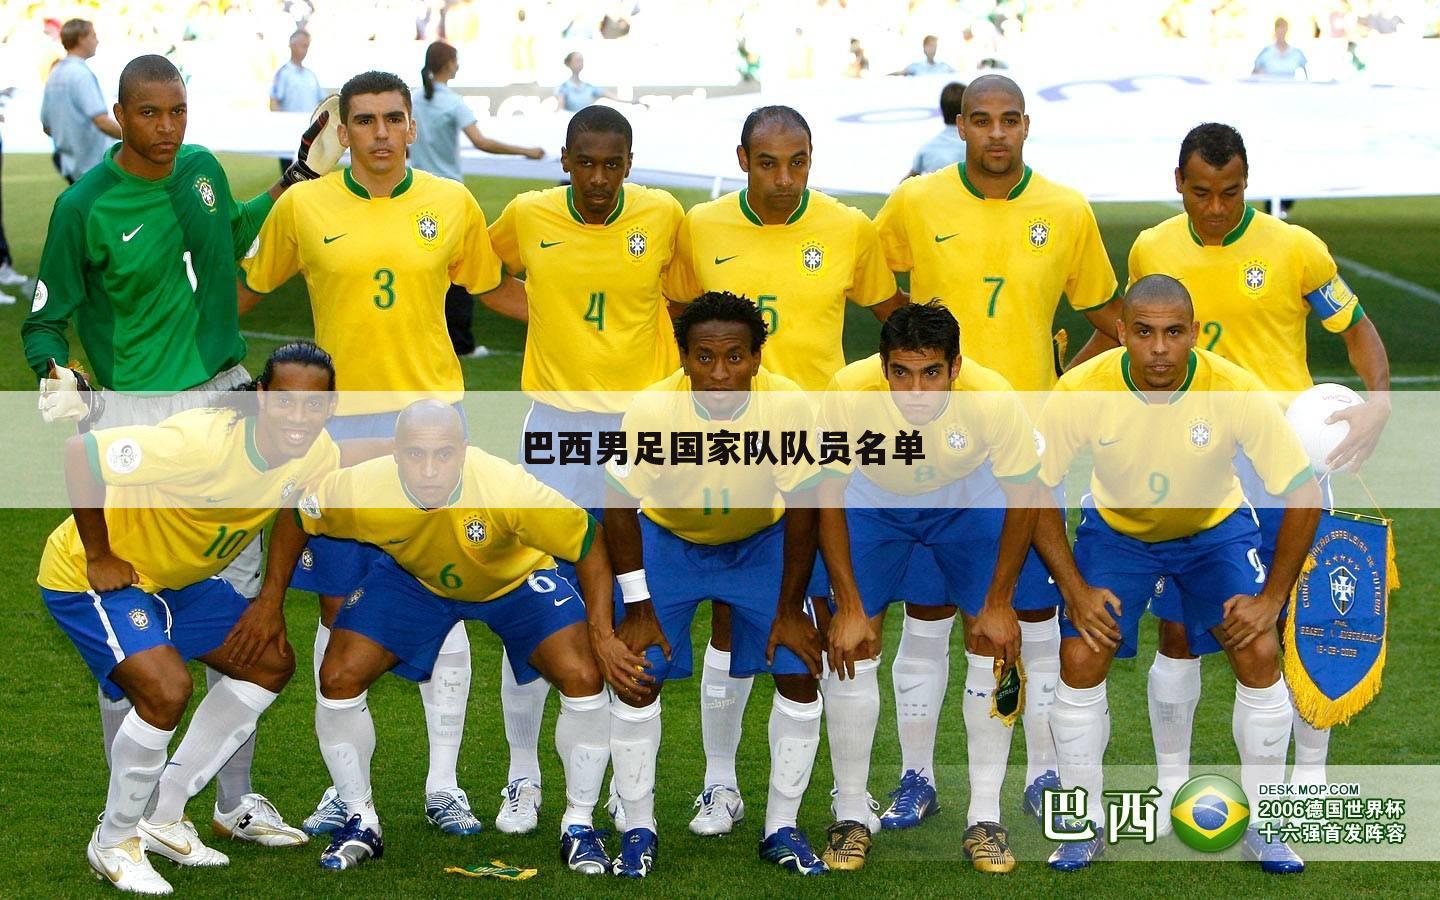 <b>(巴西足球)巴西足球队成员名单</b>